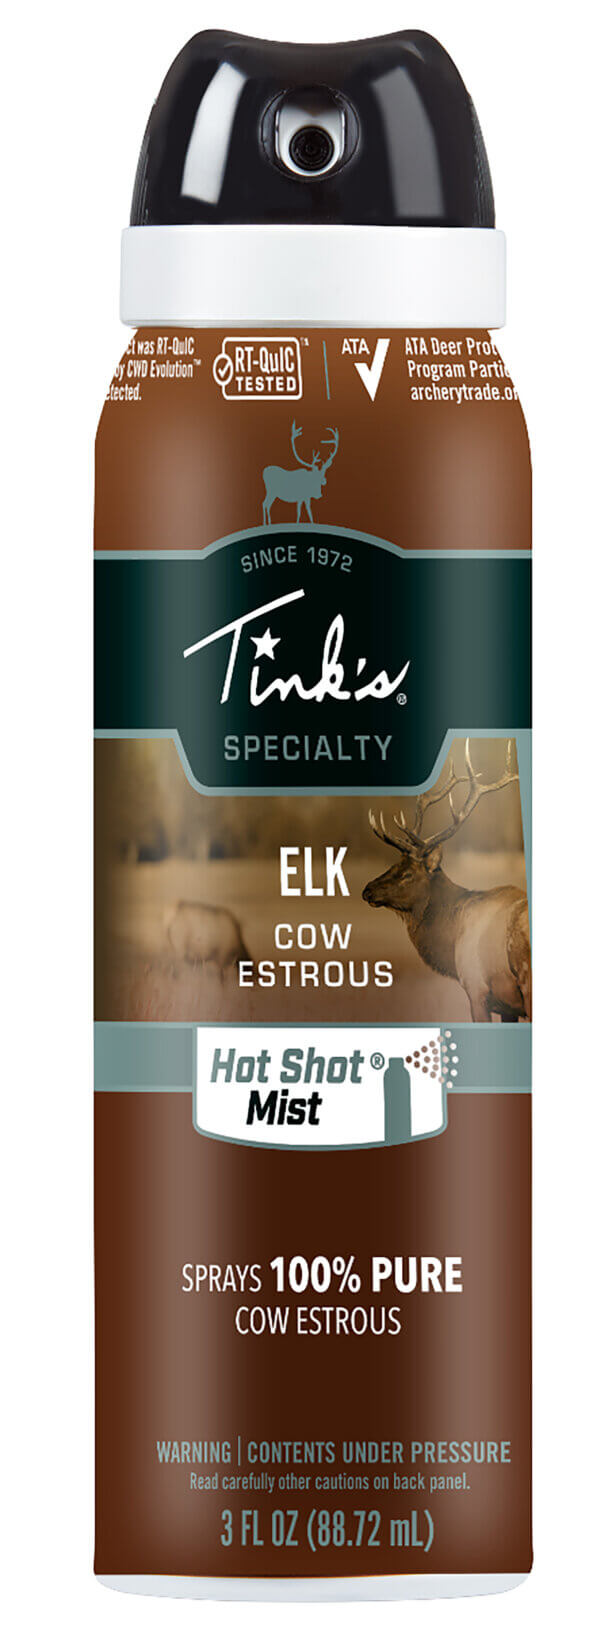 Tinks W5330 Hot Shot Mist Attractant Elk Cow in Estrous Scent 3 oz Aerosol